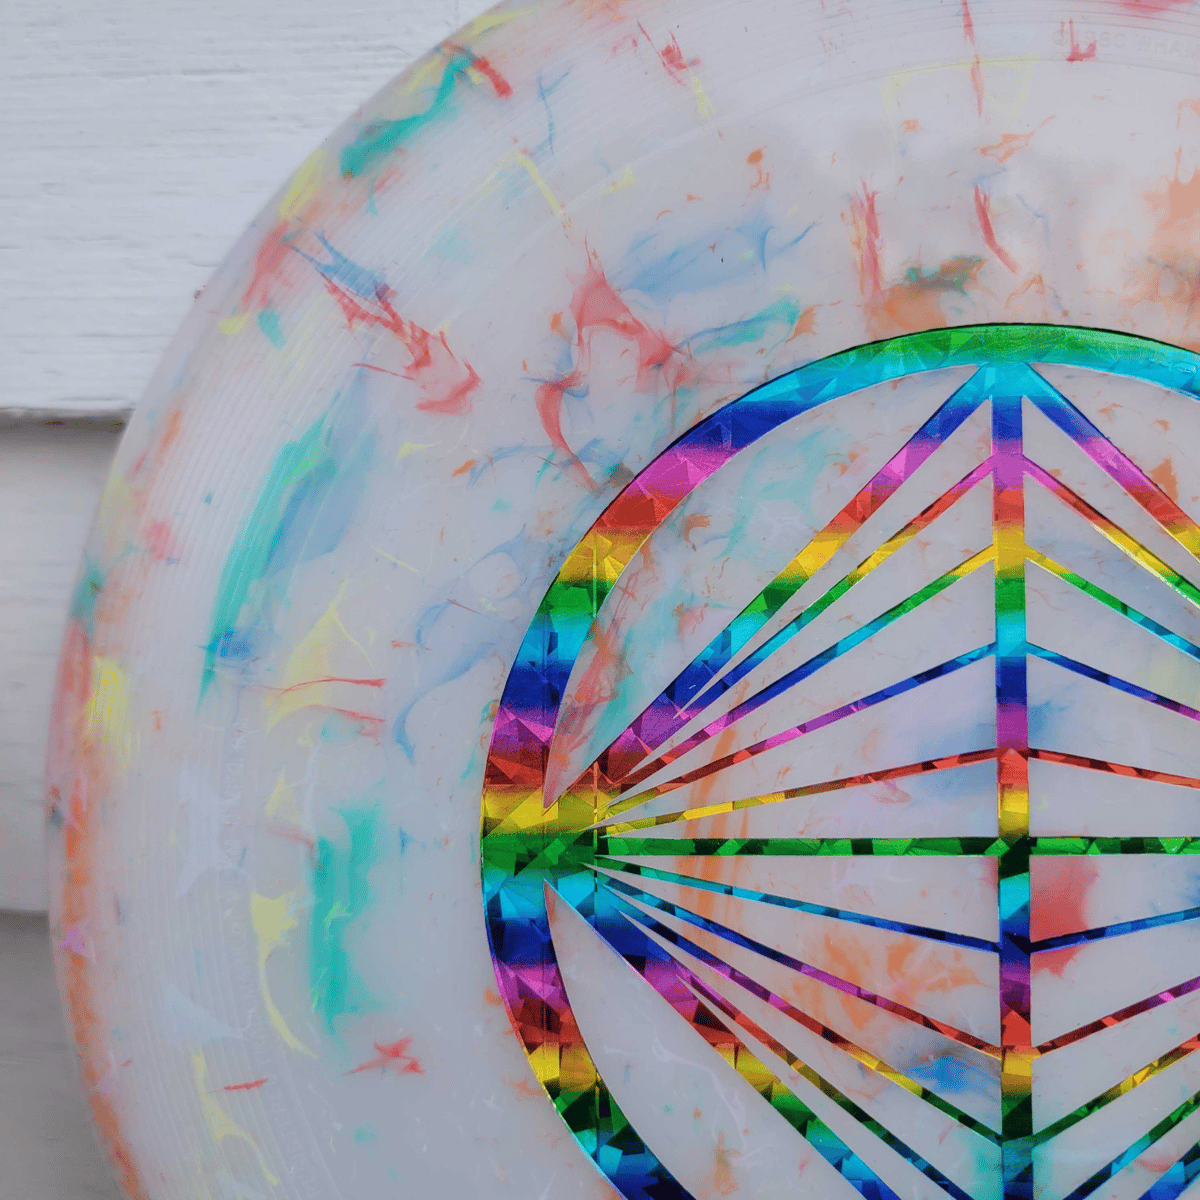 Image of Recycled Plastic Catch Frisbee - Rainbow Diamond